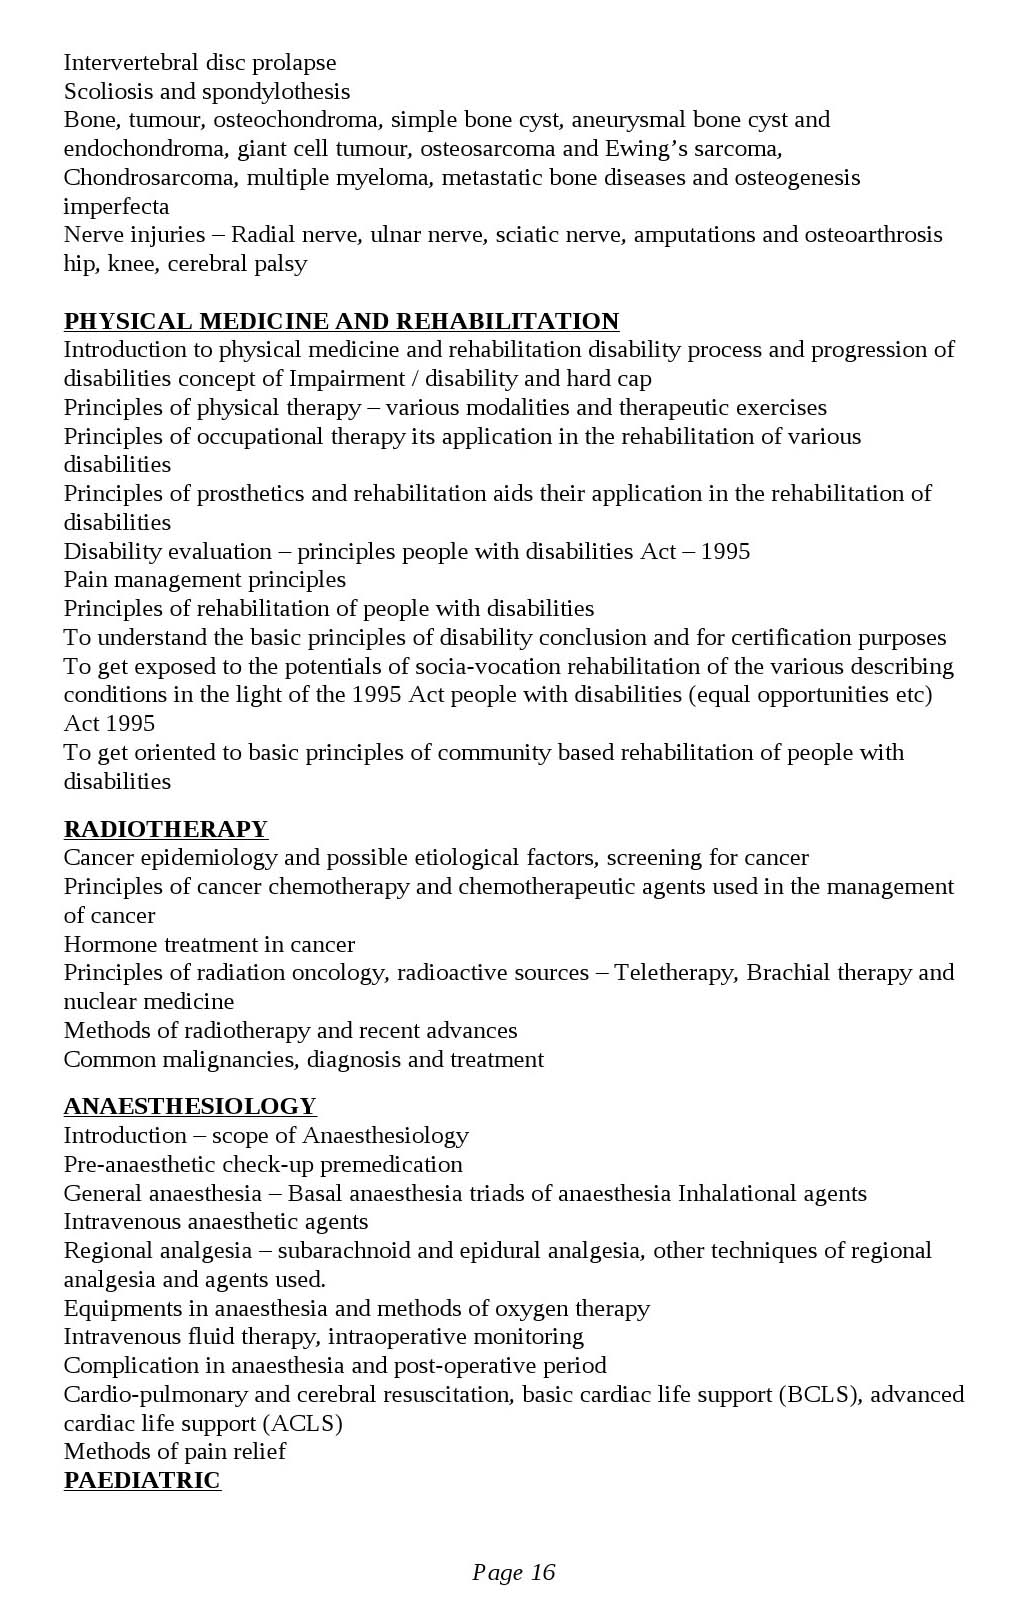 Kerala PSC Assistant Surgeon Exam Syllabus May 2020 - Notification Image 16